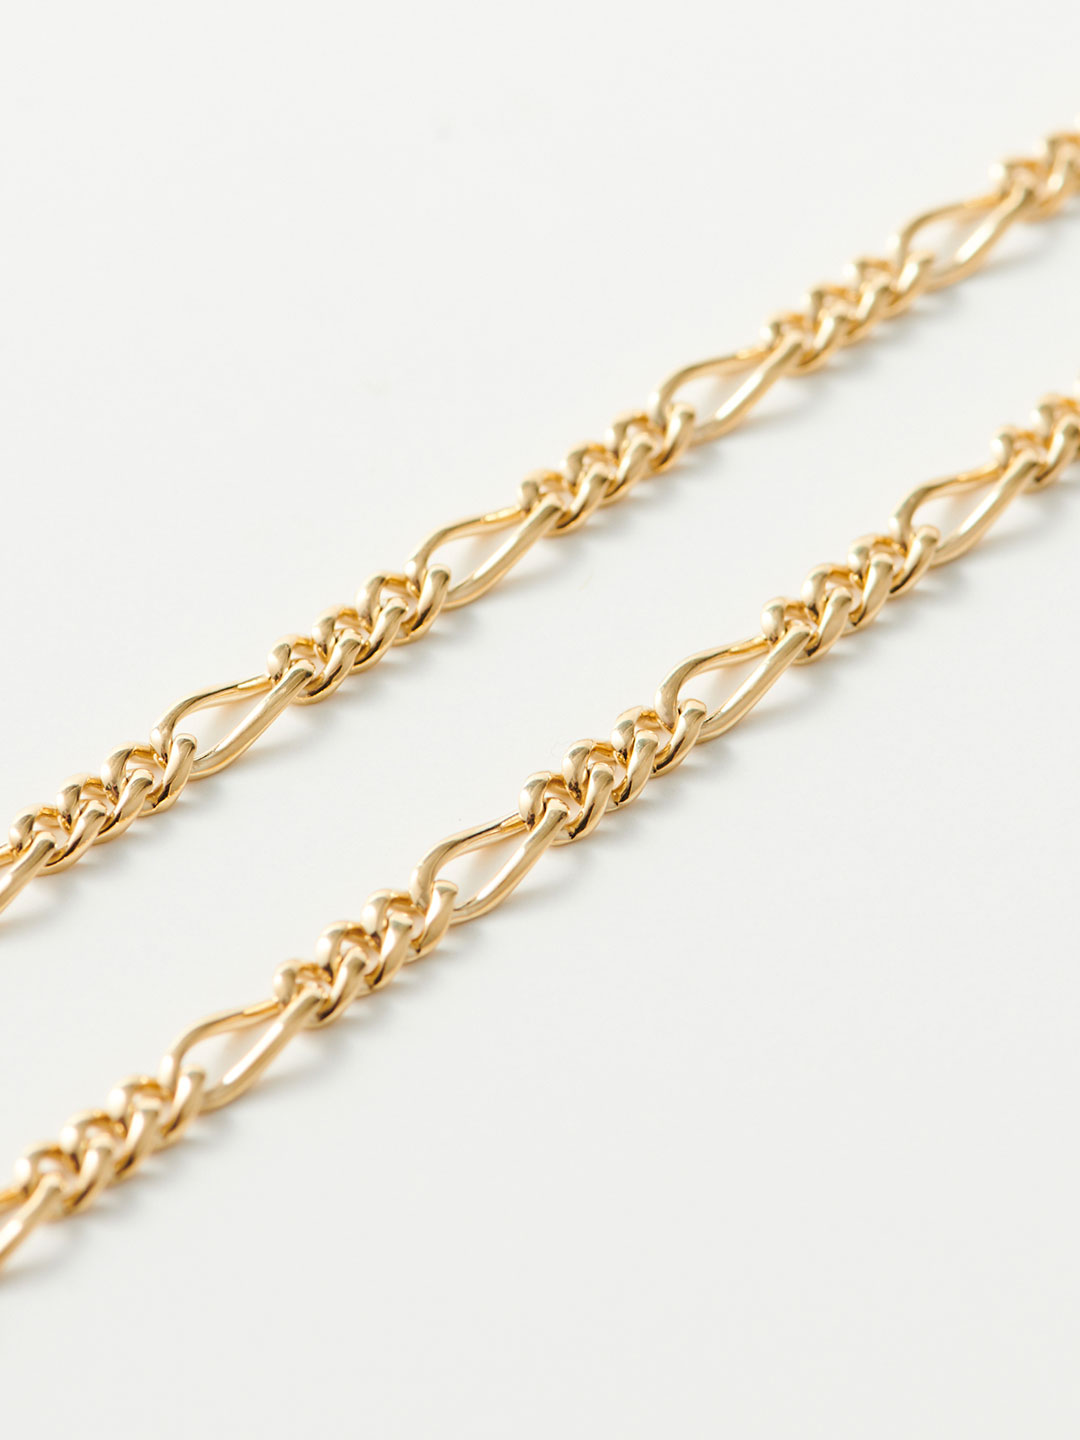 Long & Short Necklace 51cm / L&S 1:3 - Yellow Gold